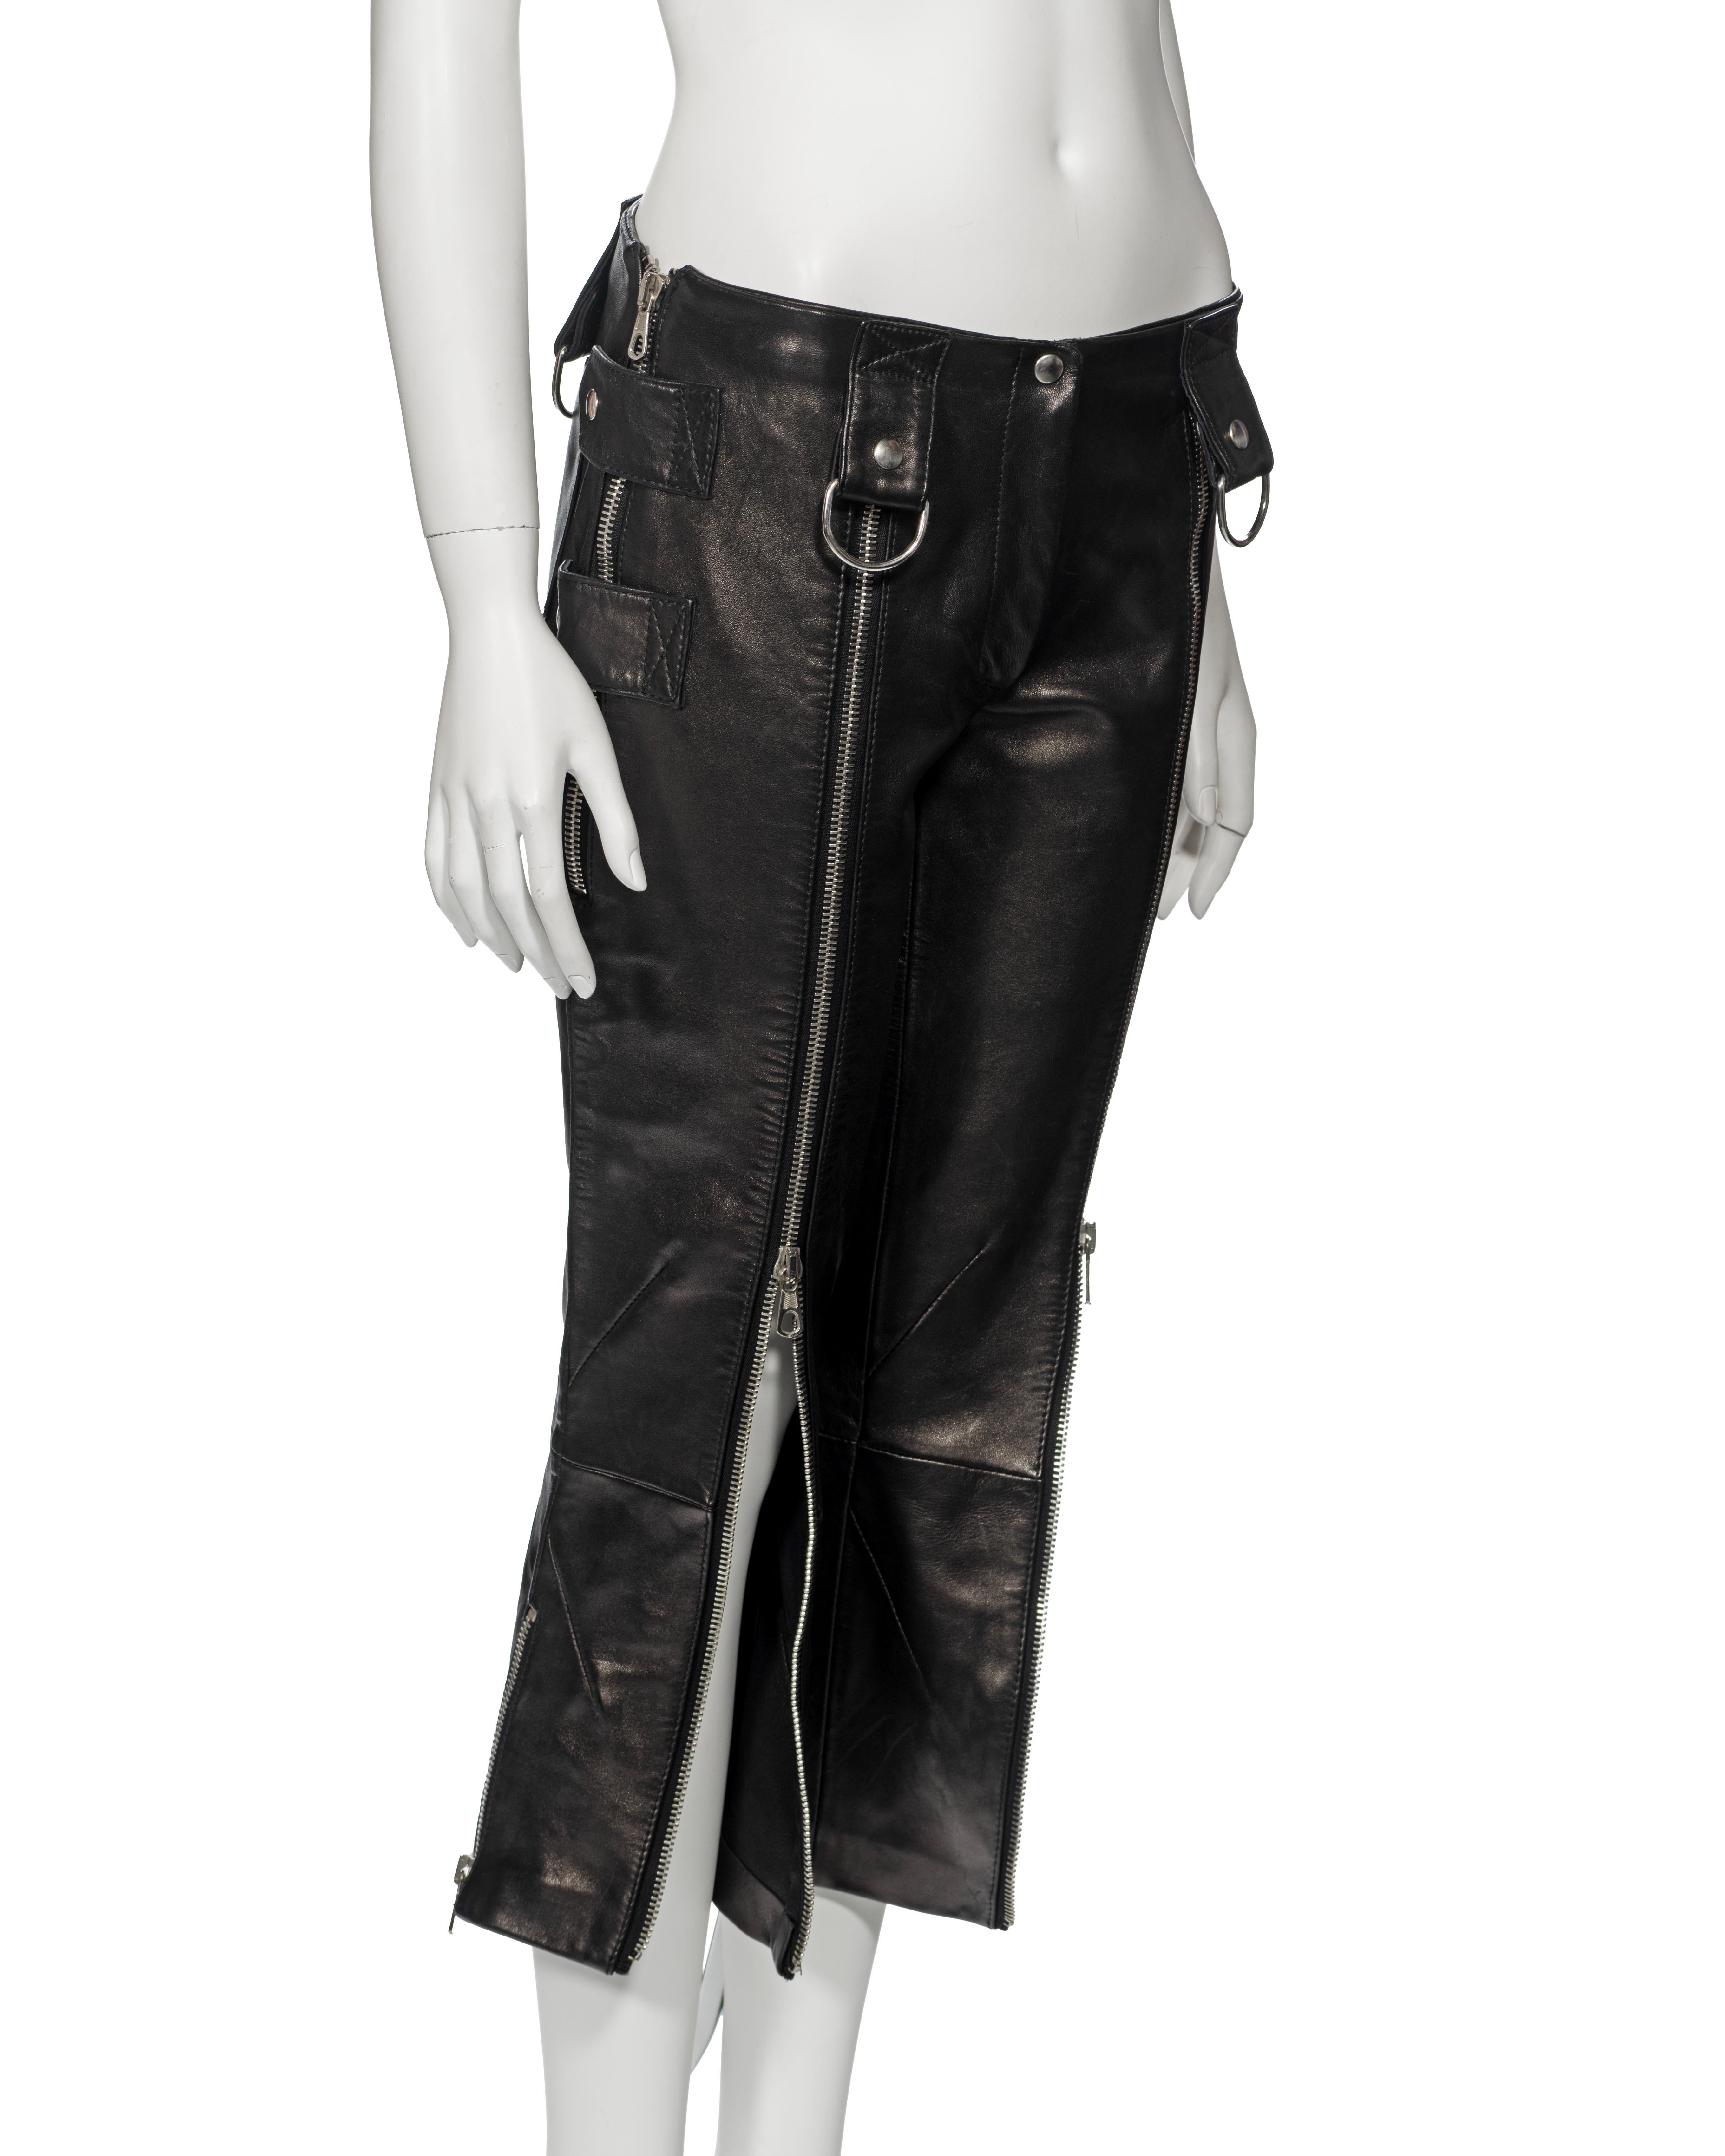 Dolce & Gabbana Black Leather Capri Pants, ss 2000 For Sale 2